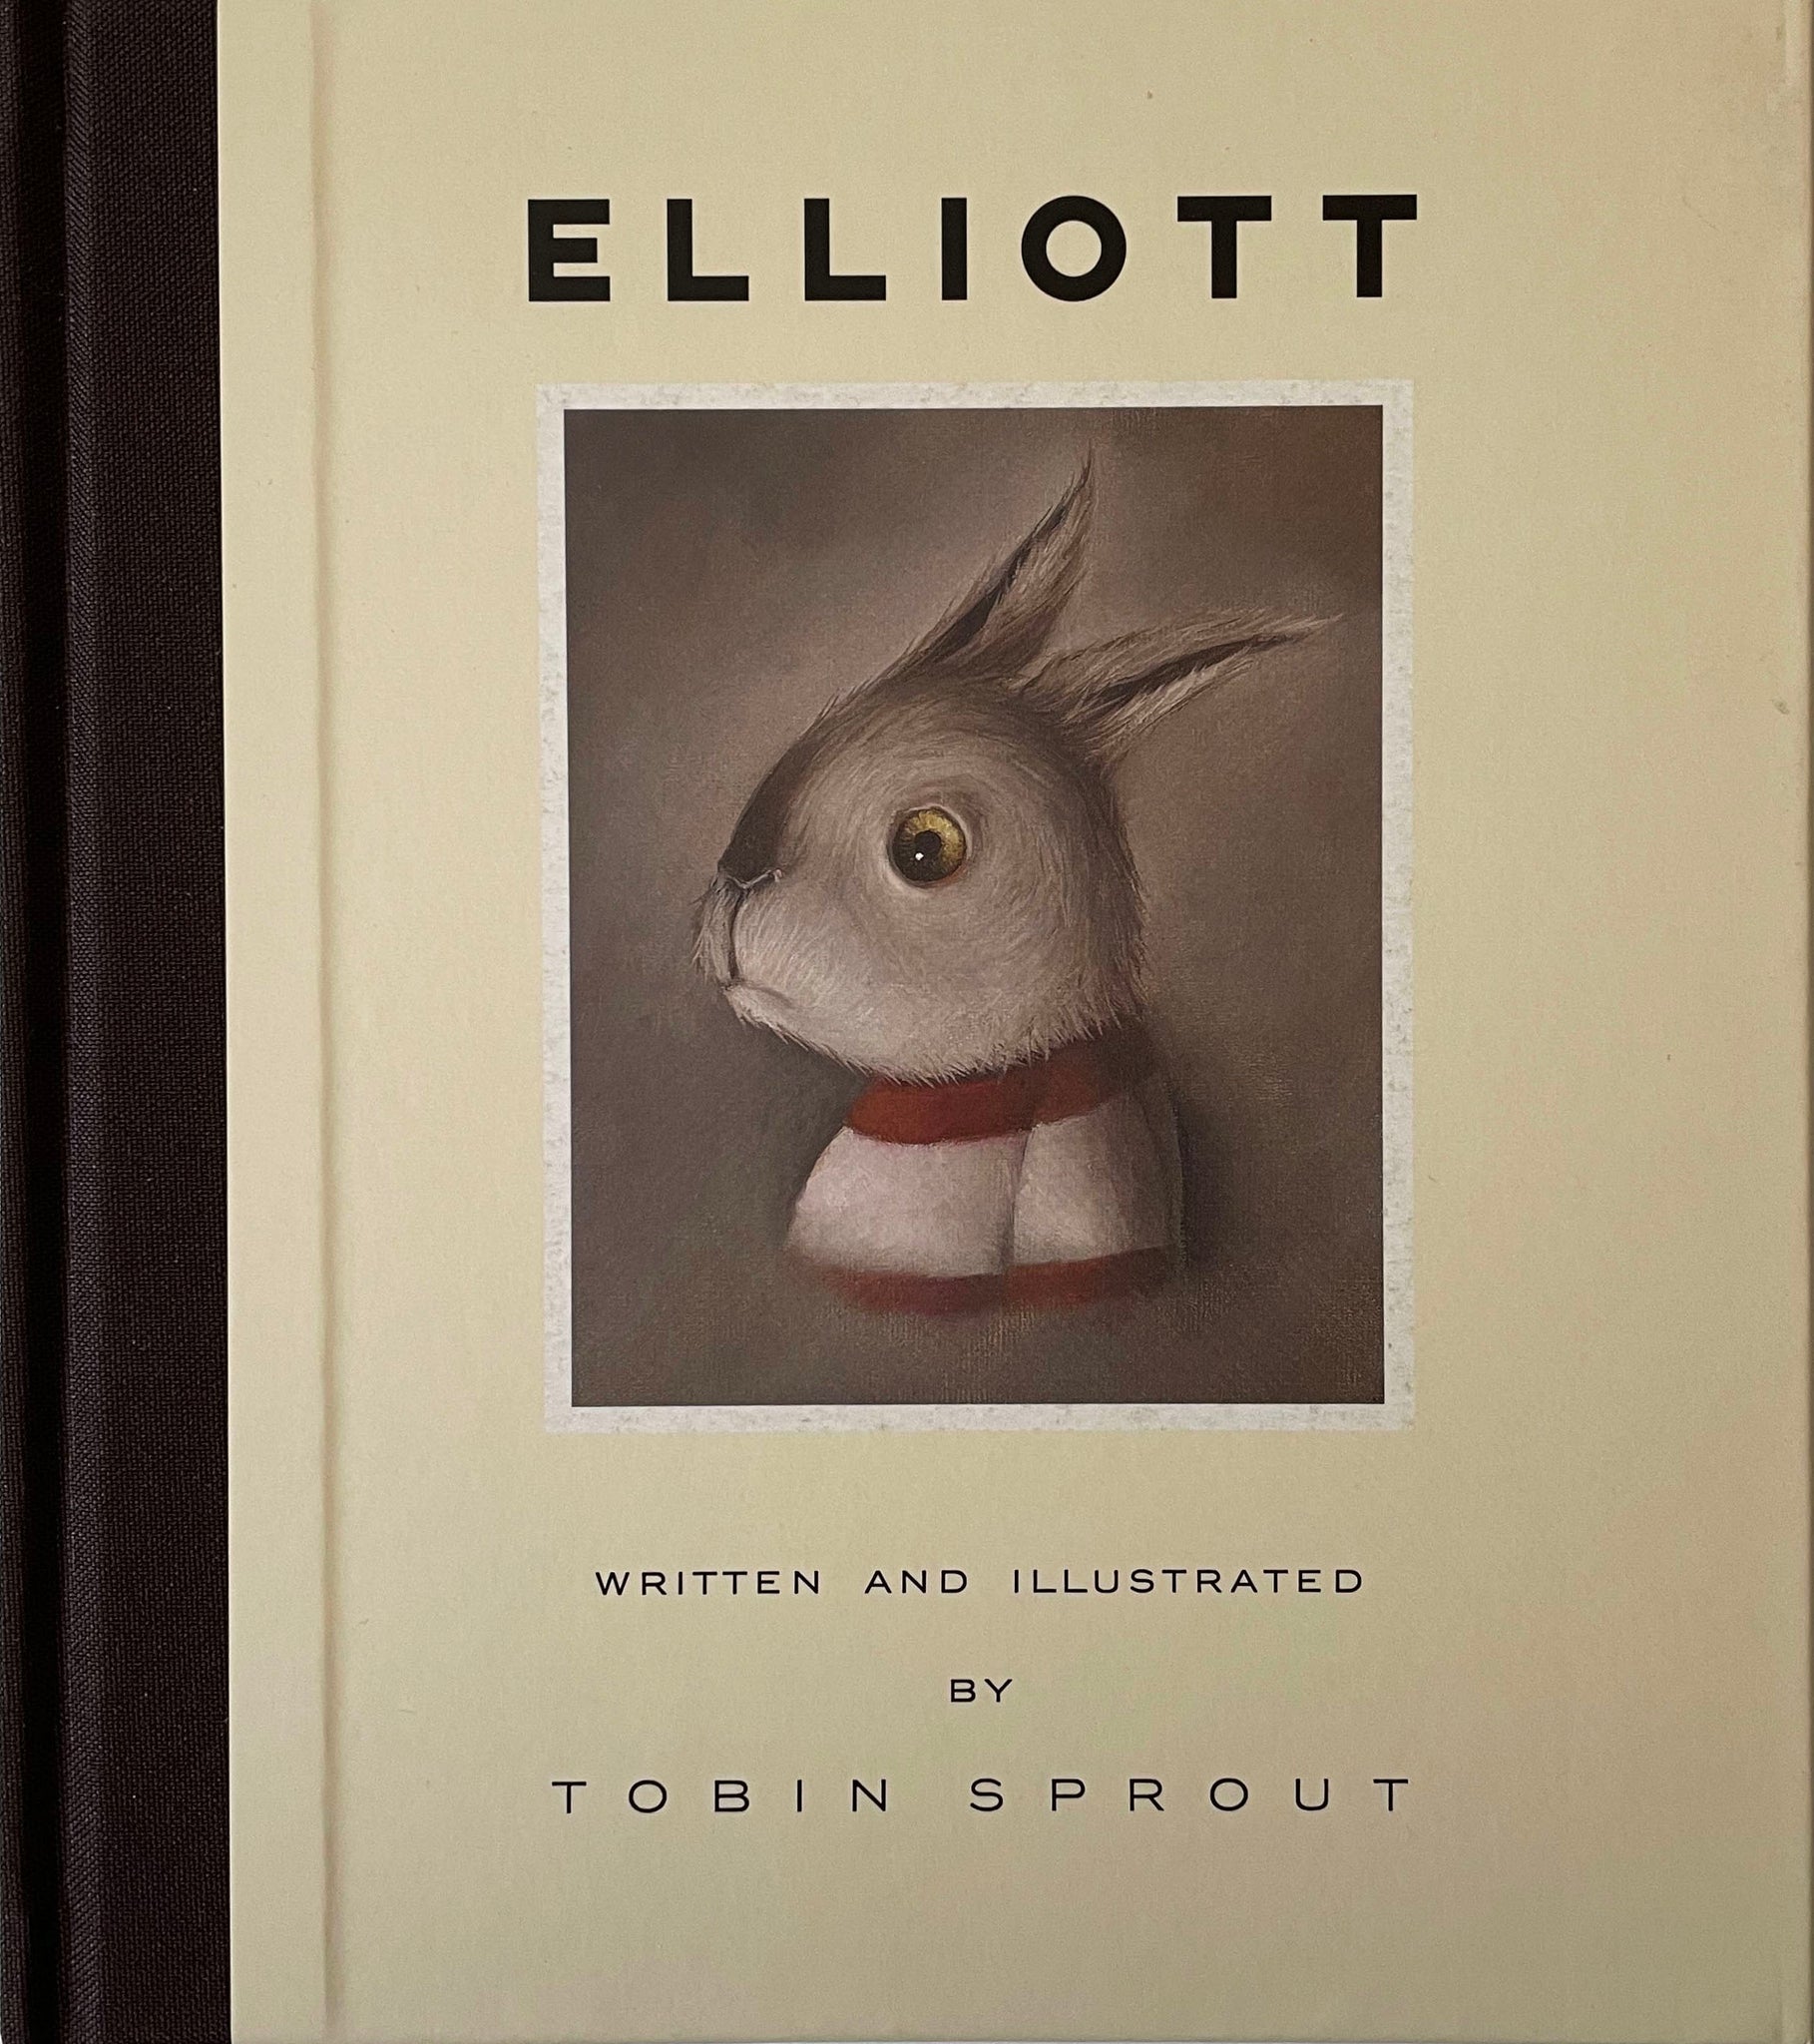 Elliott (Limited Edition)